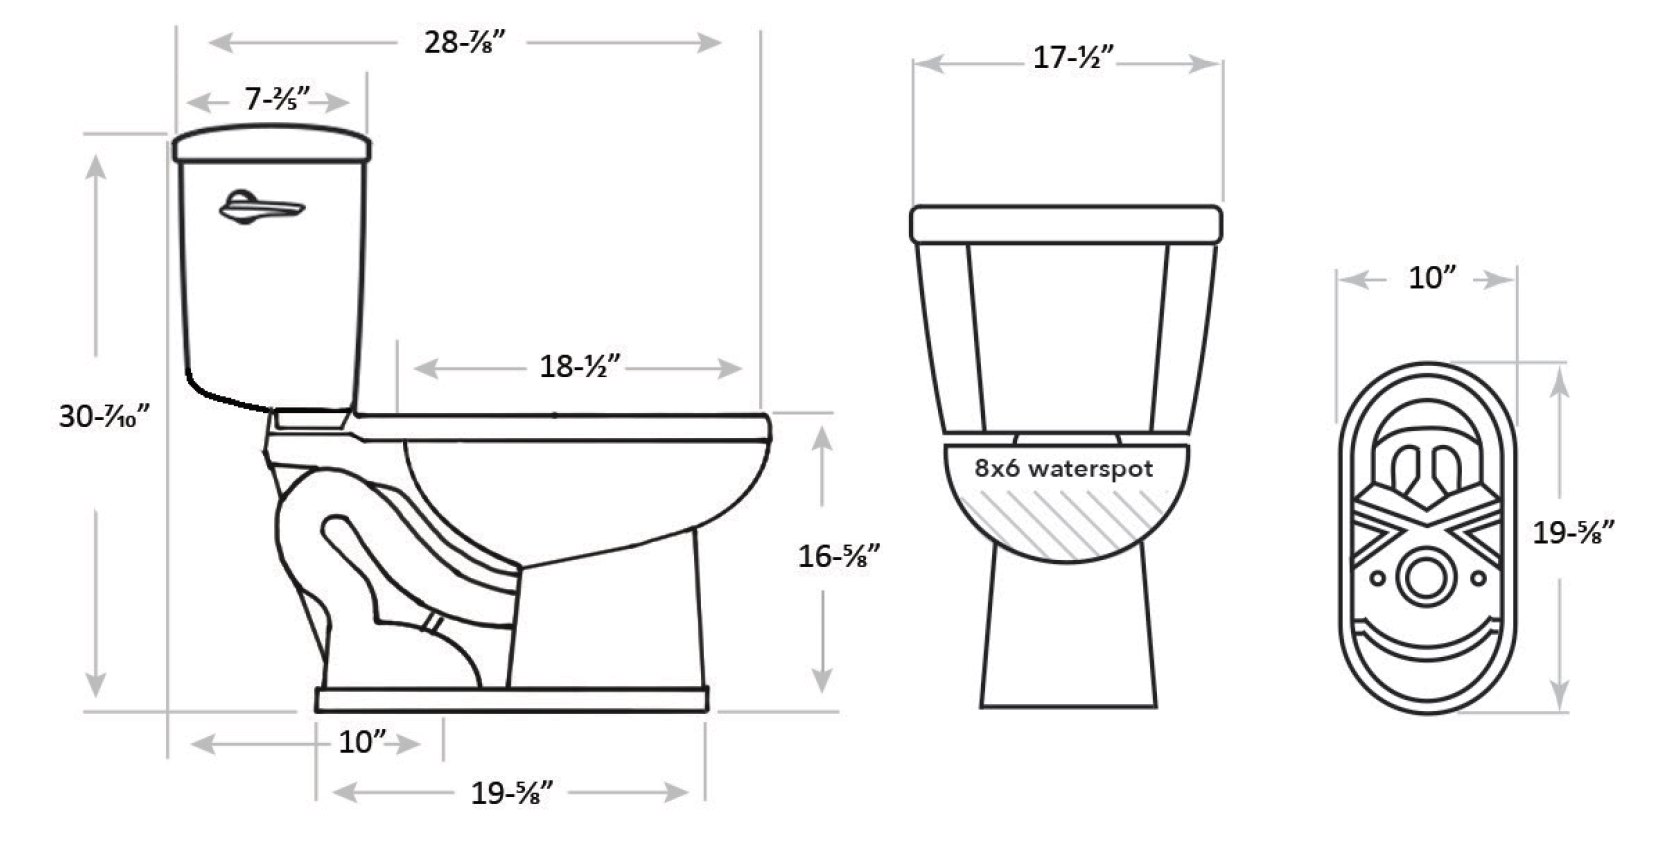 LIBERTY Elongated ADA Toilet technical information